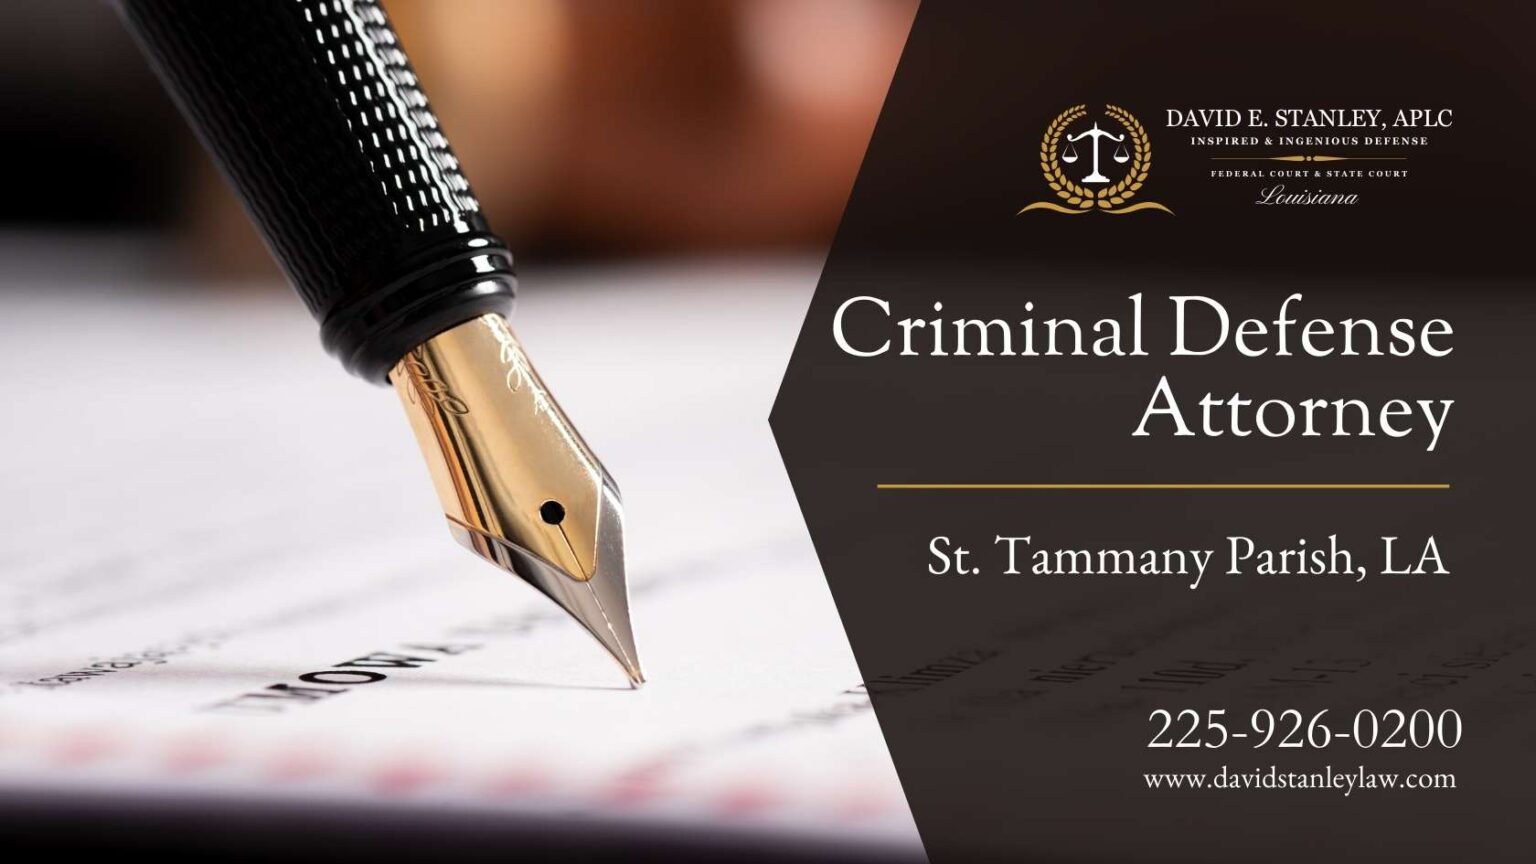 Criminal Defense Attorney St. Tammany Parish LA